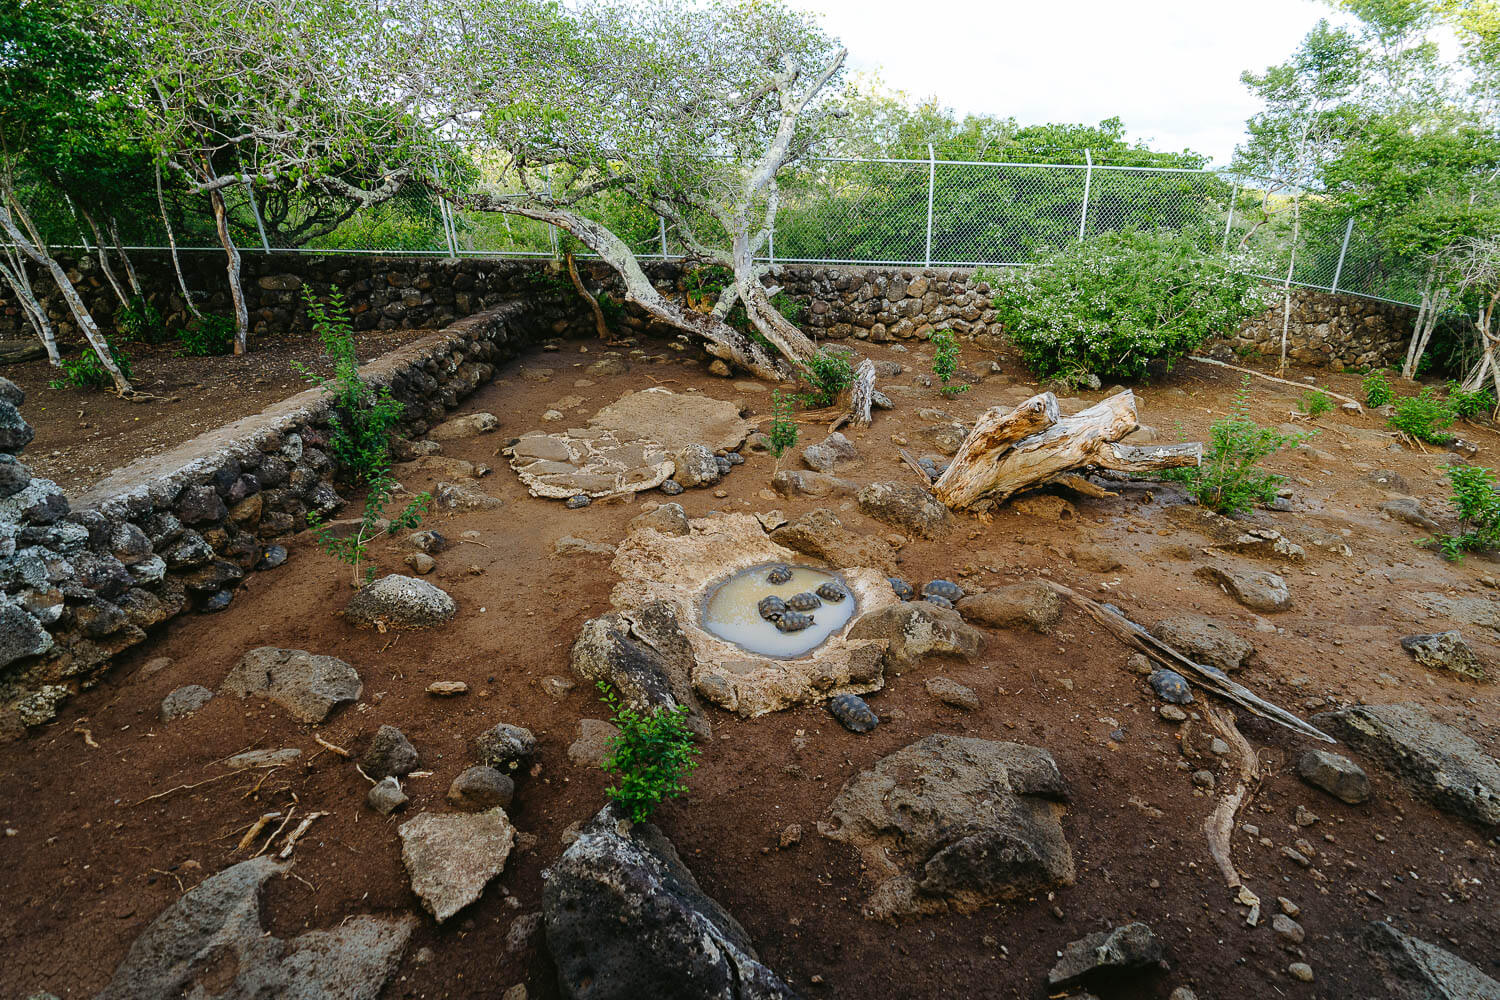 The juvenile tortoises area